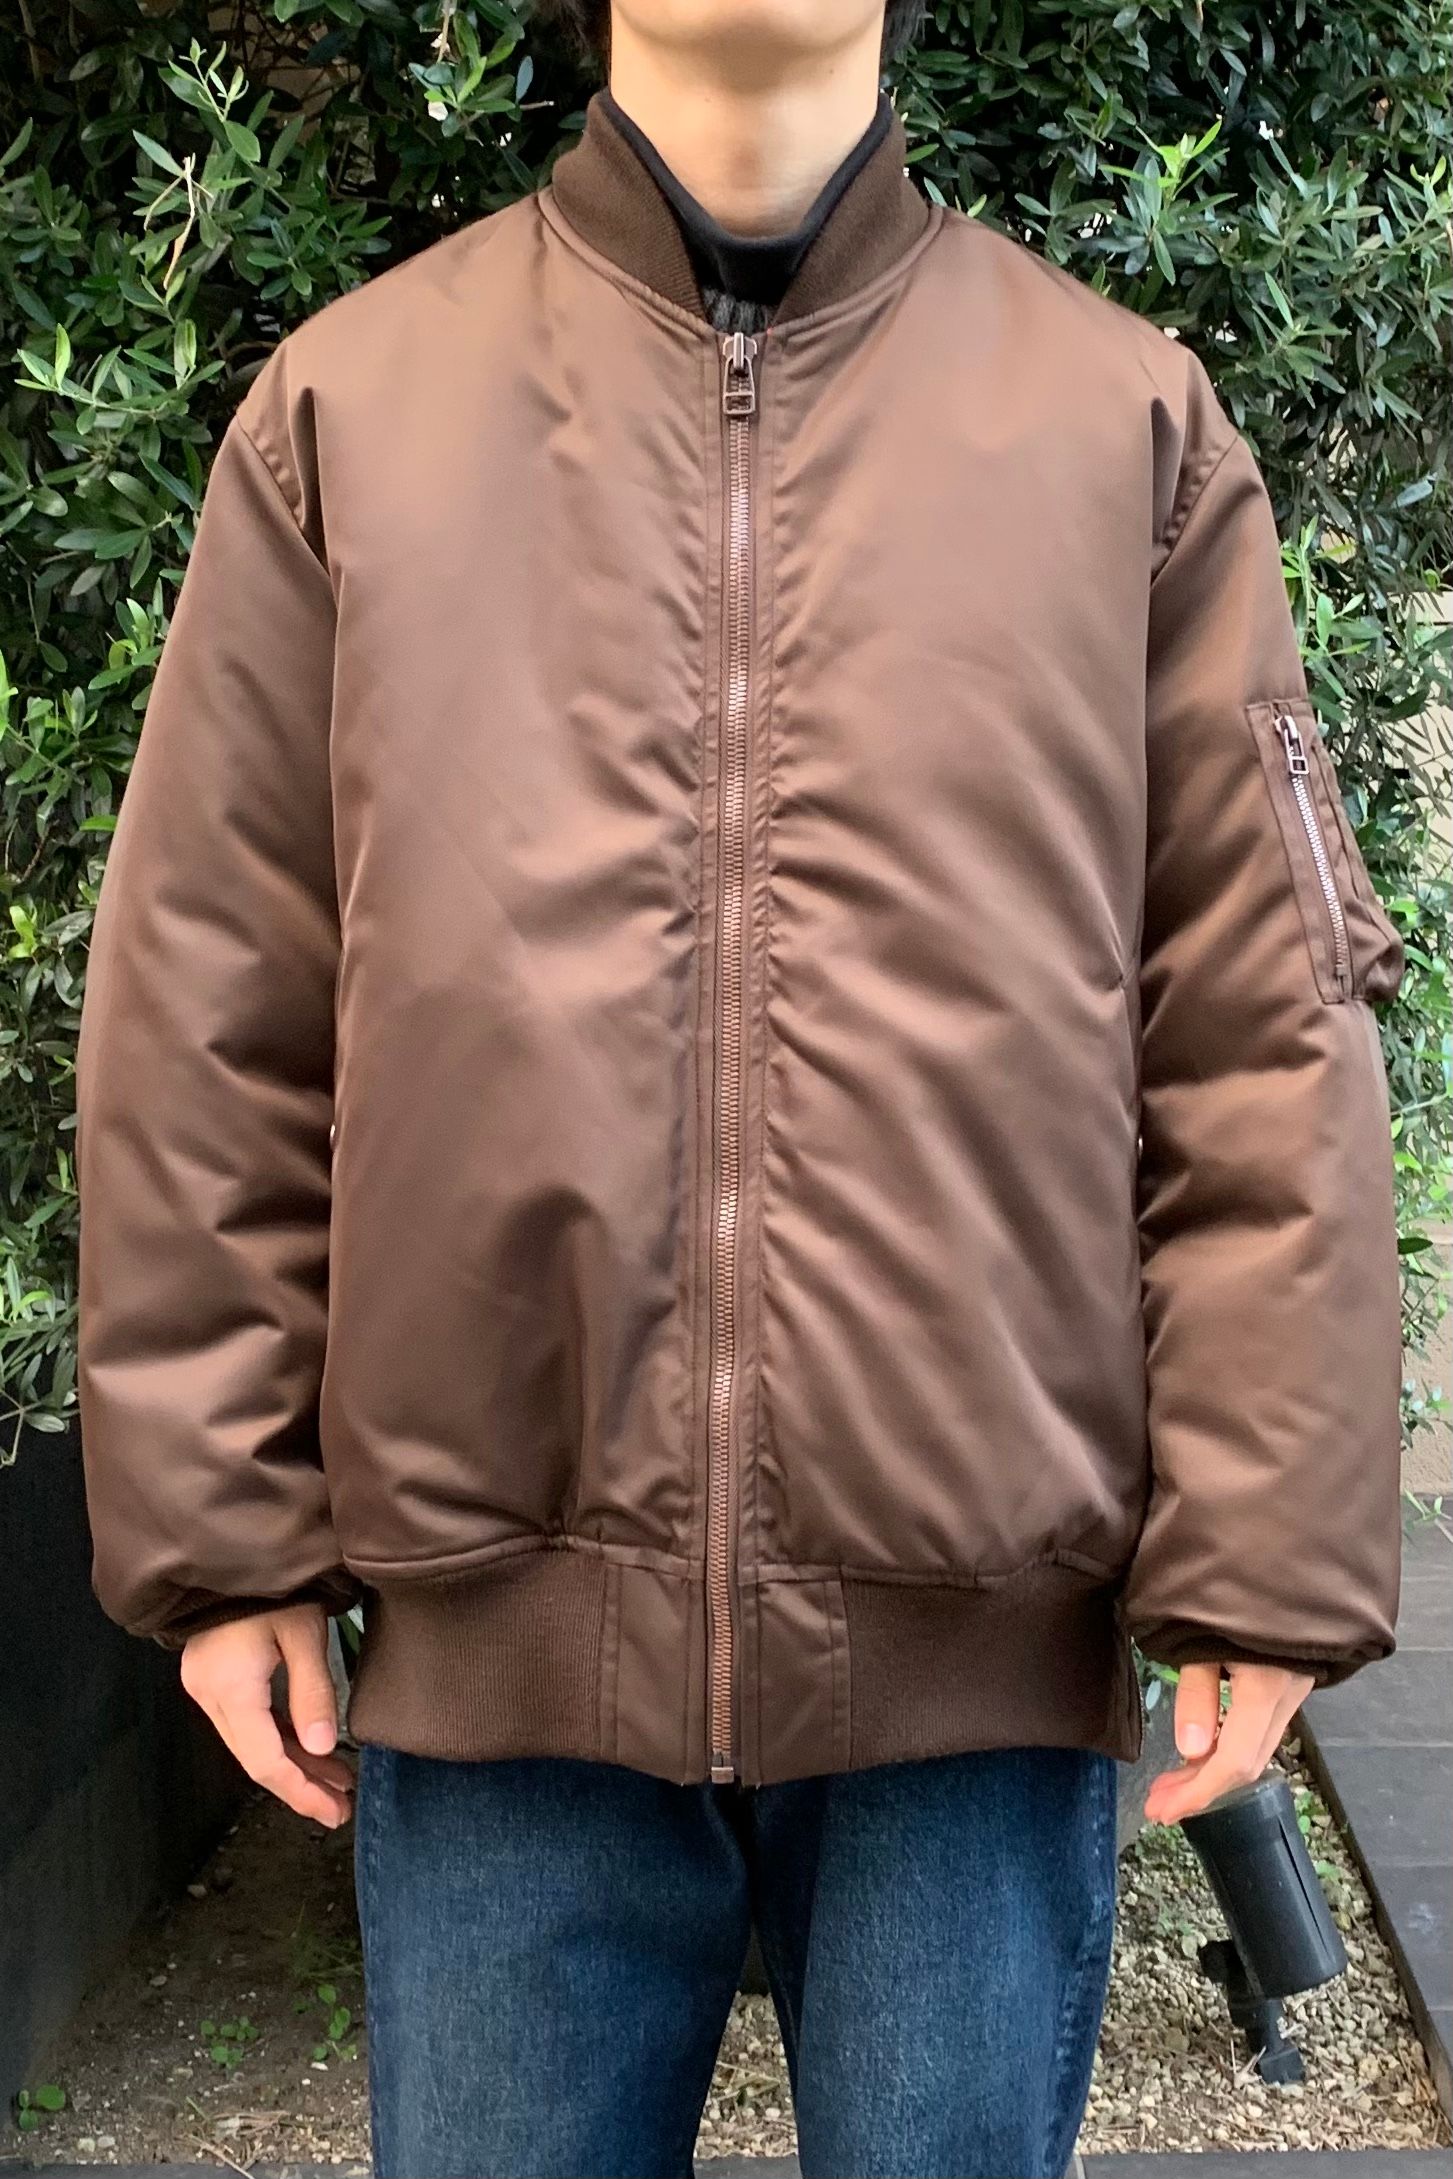 WEWILL - wa-1 jacket 22aw -brown- | asterisk